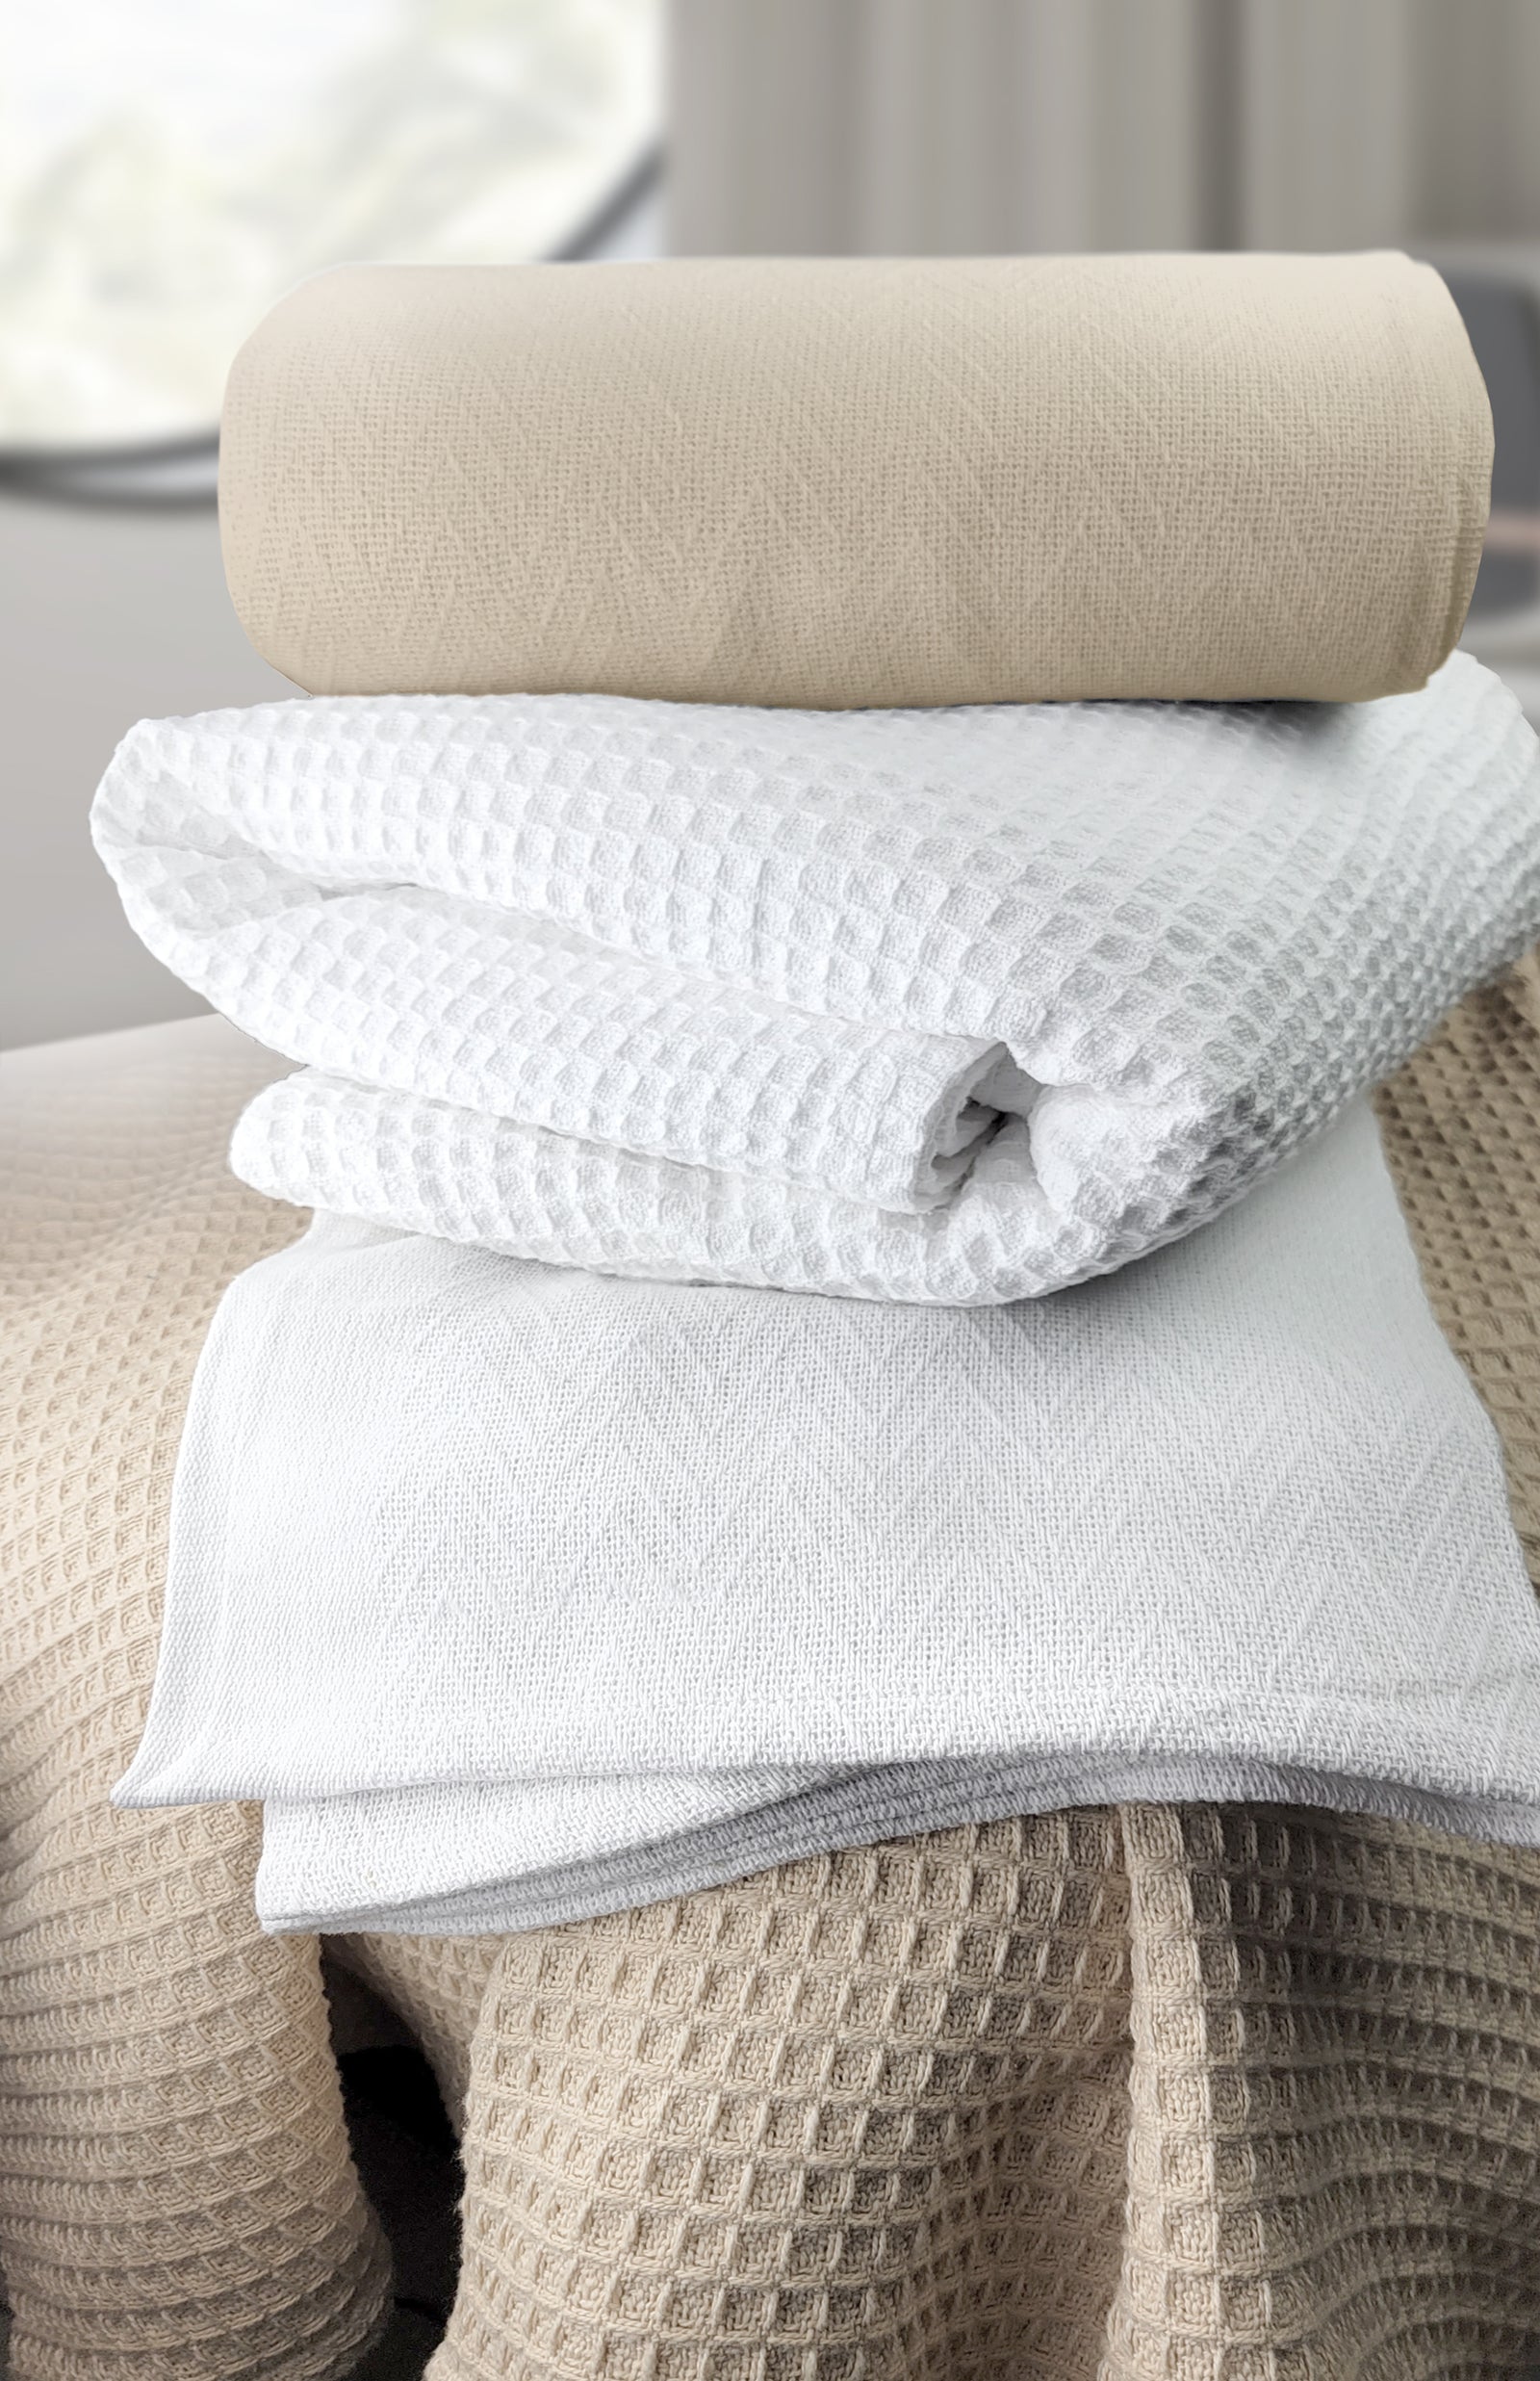 Wholesale Bar Mop Towels By Intralin - Bulk Linen Supply